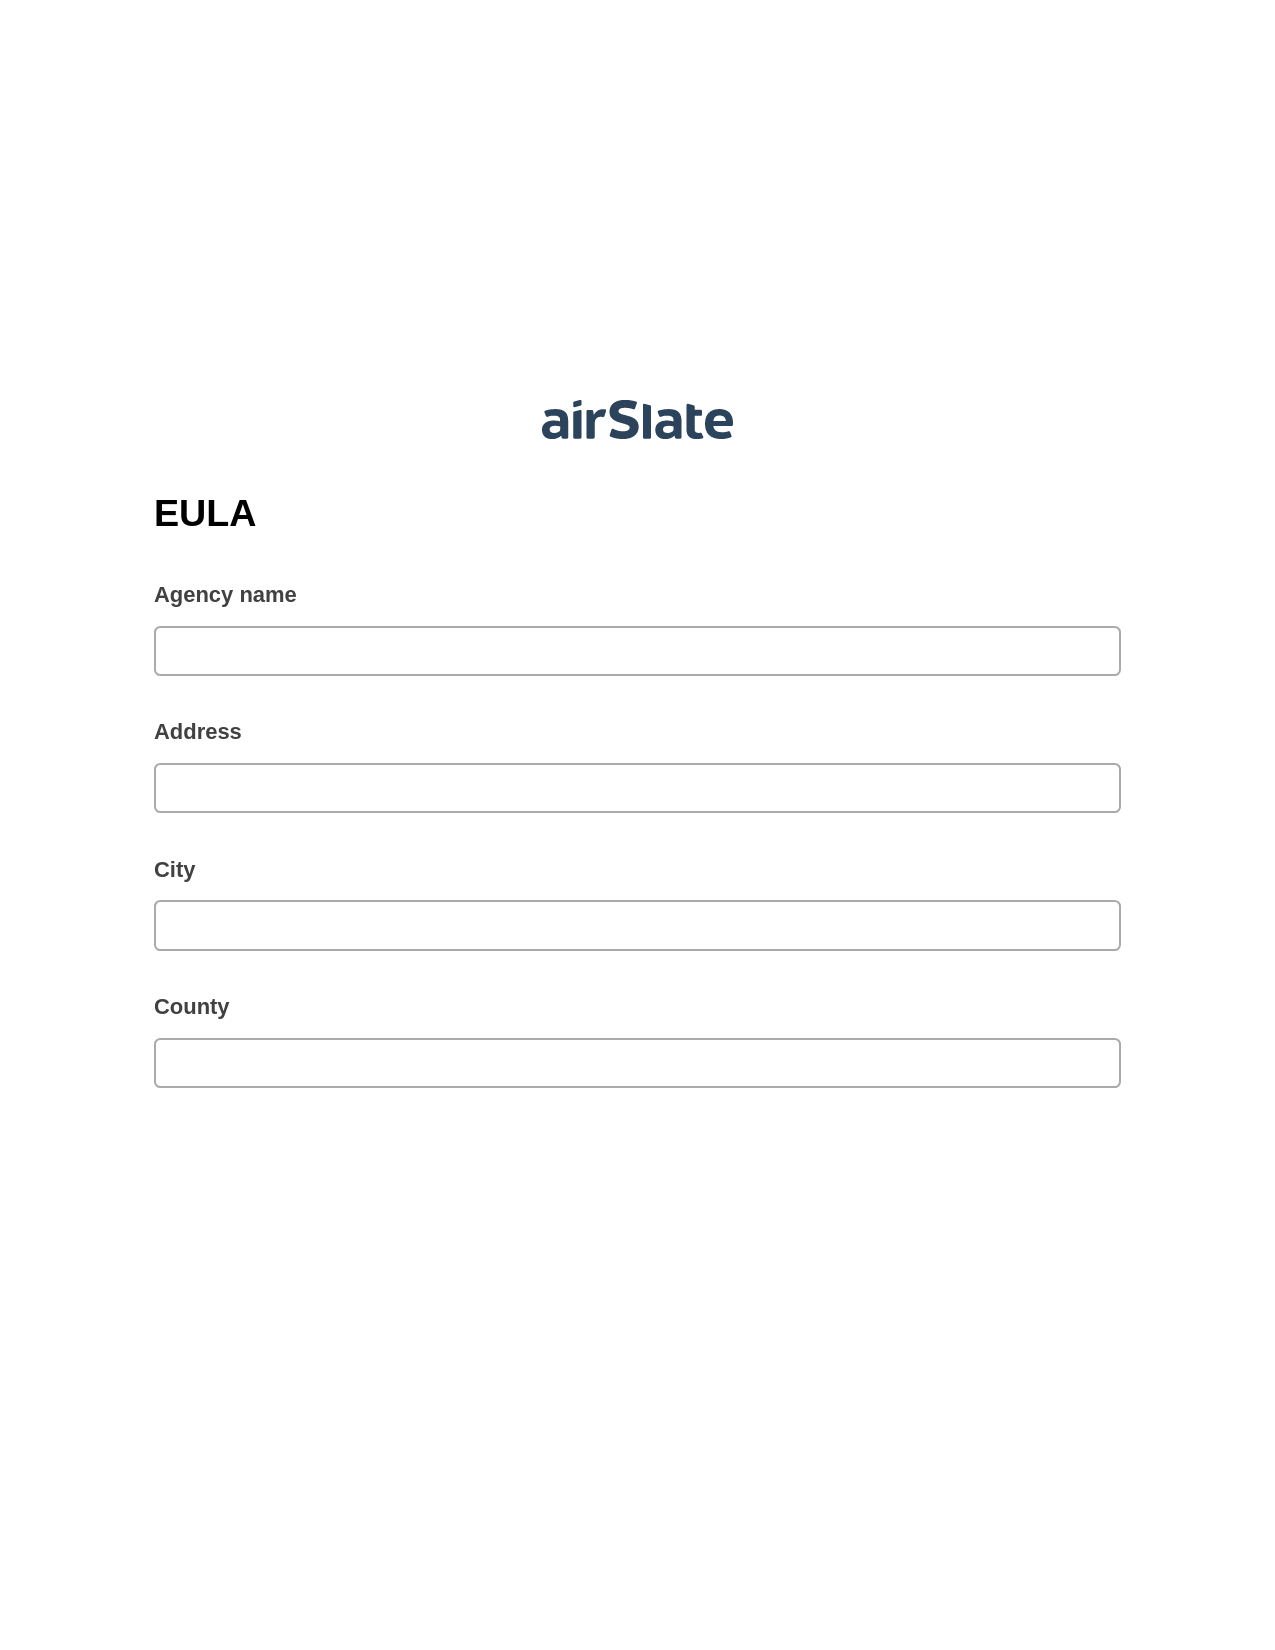 EULA Pre-fill from CSV File Dropdown Options Bot, Webhook Bot, Box Bot